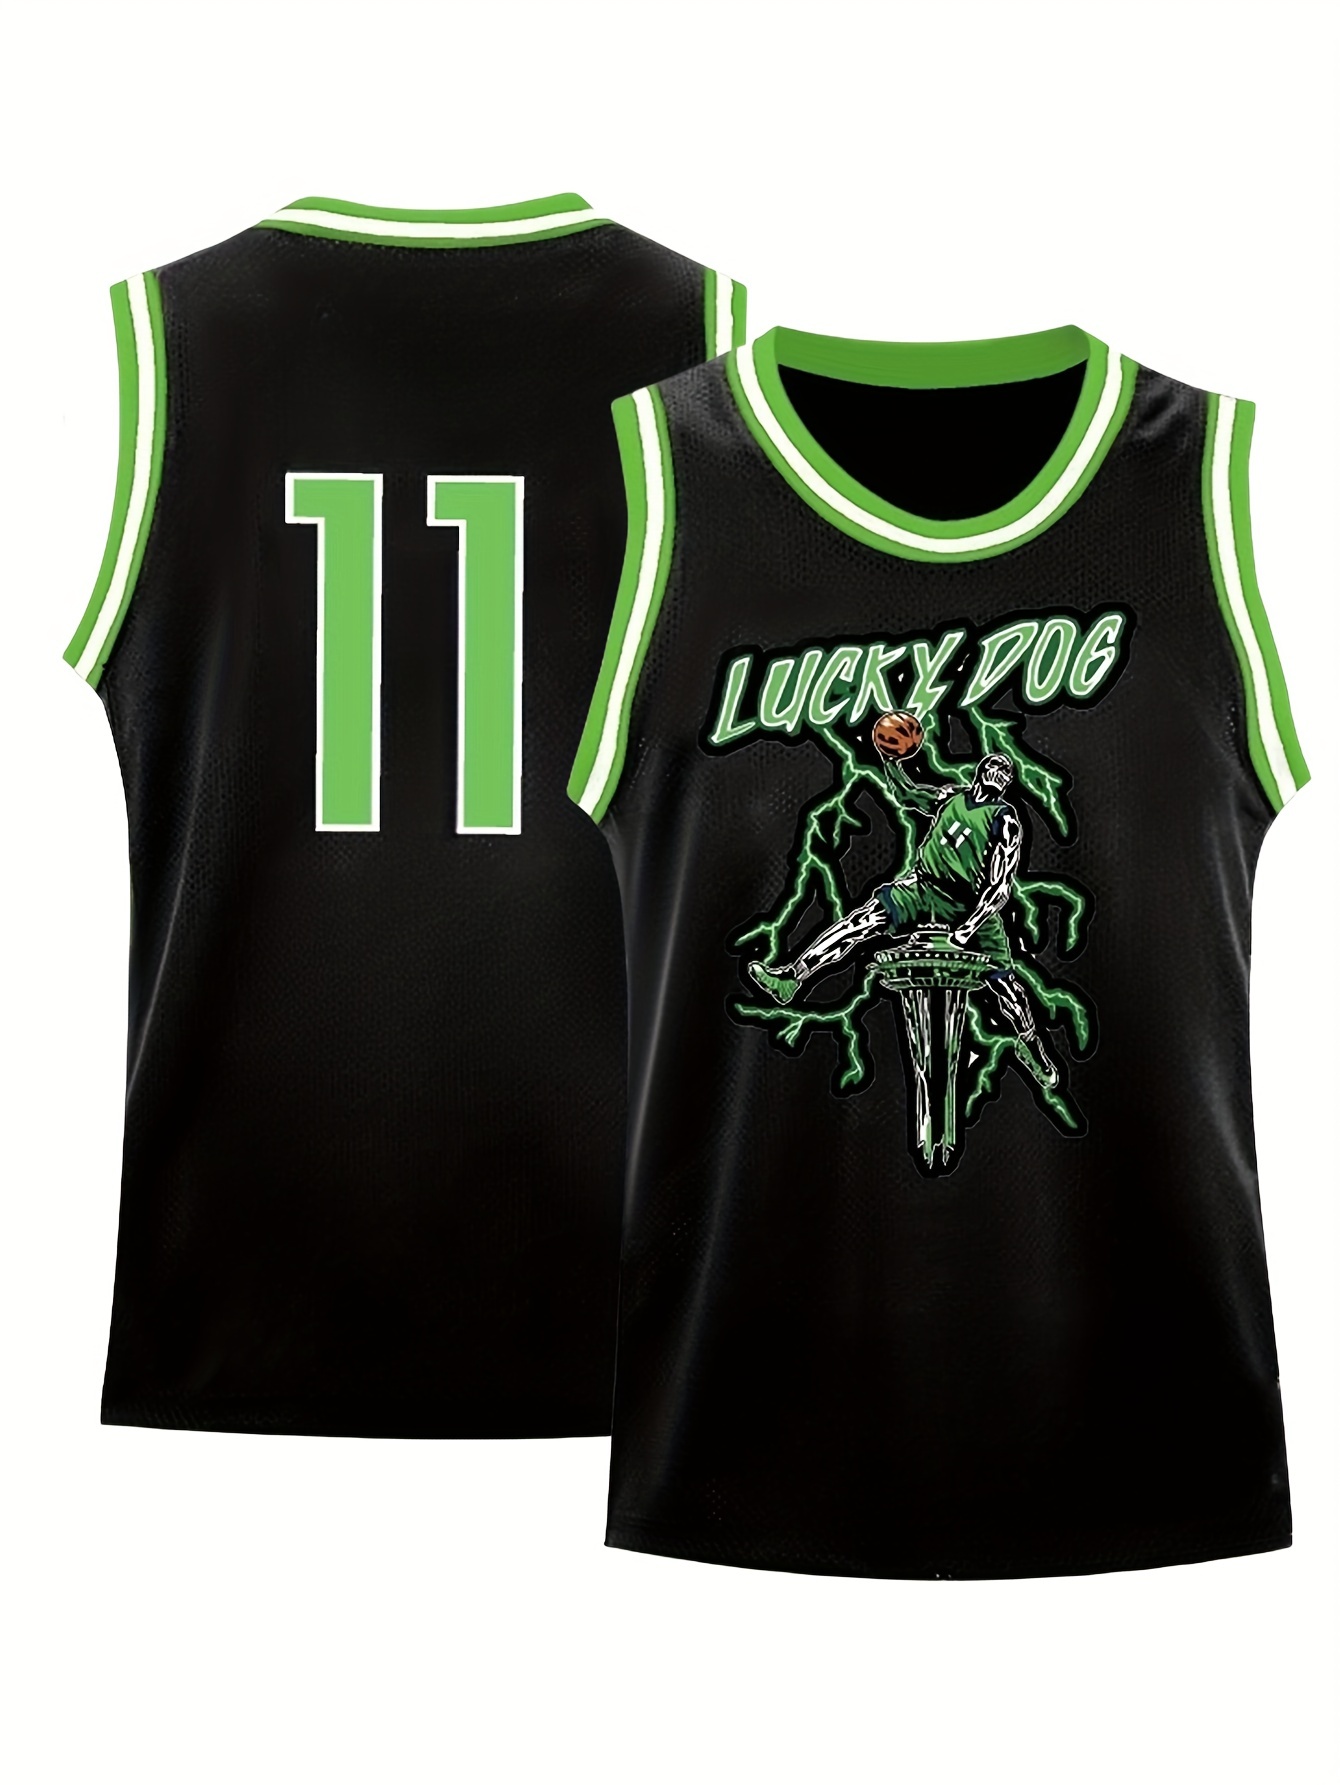 190 Best Basketball kit ideas  basketball kit, jersey design, basketball  uniforms design